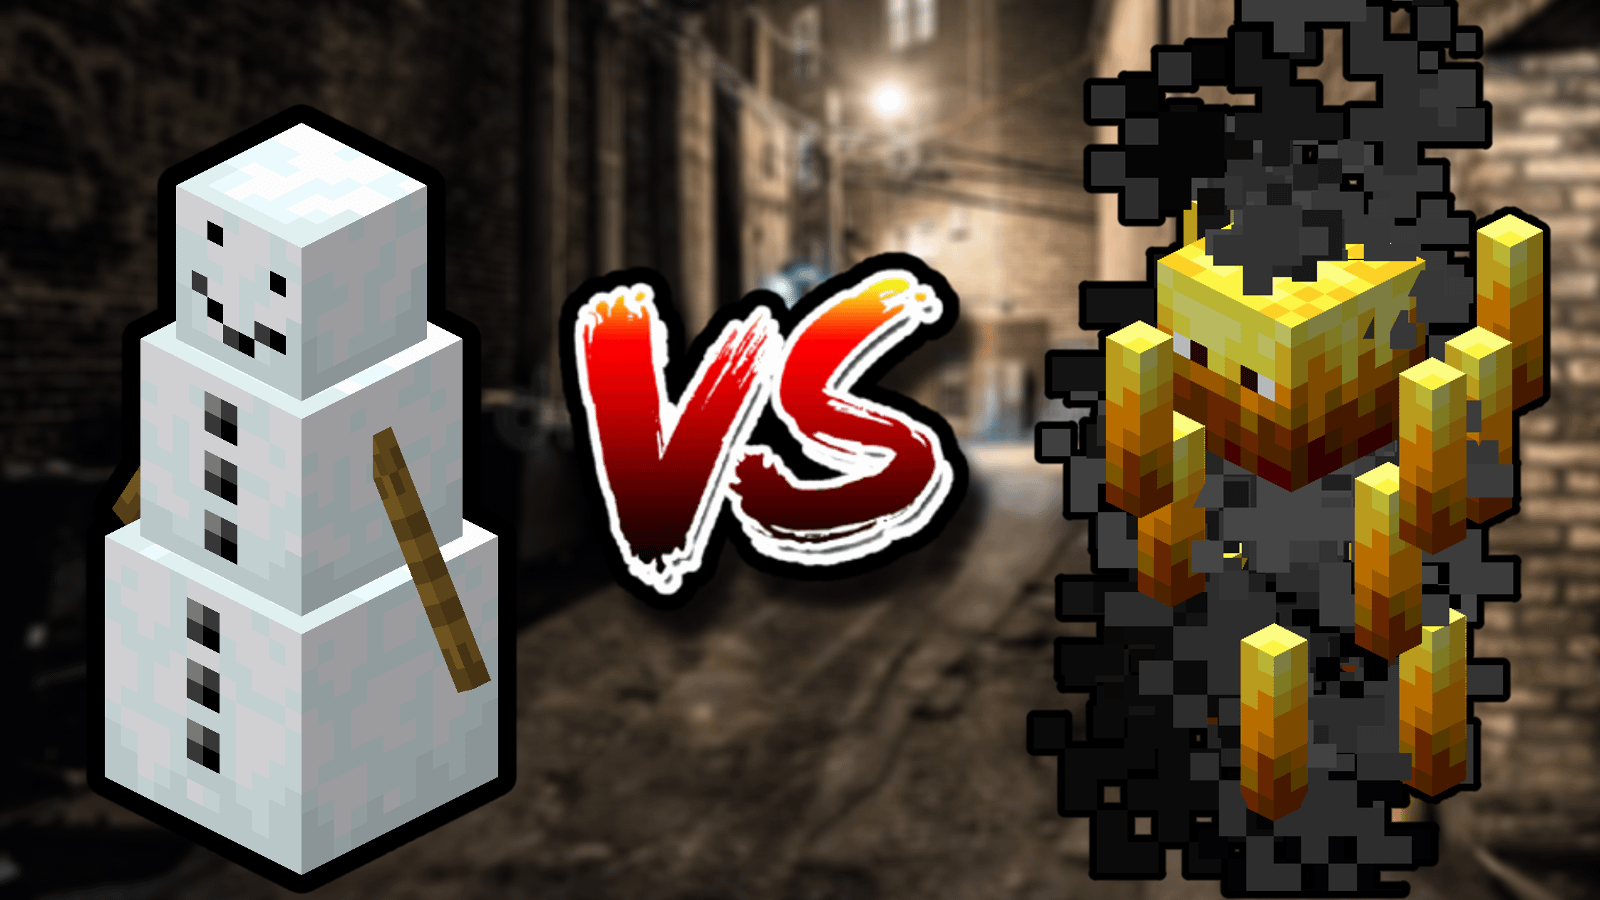 Minecraft Memes - Minecraft Showdown: Who Wins?